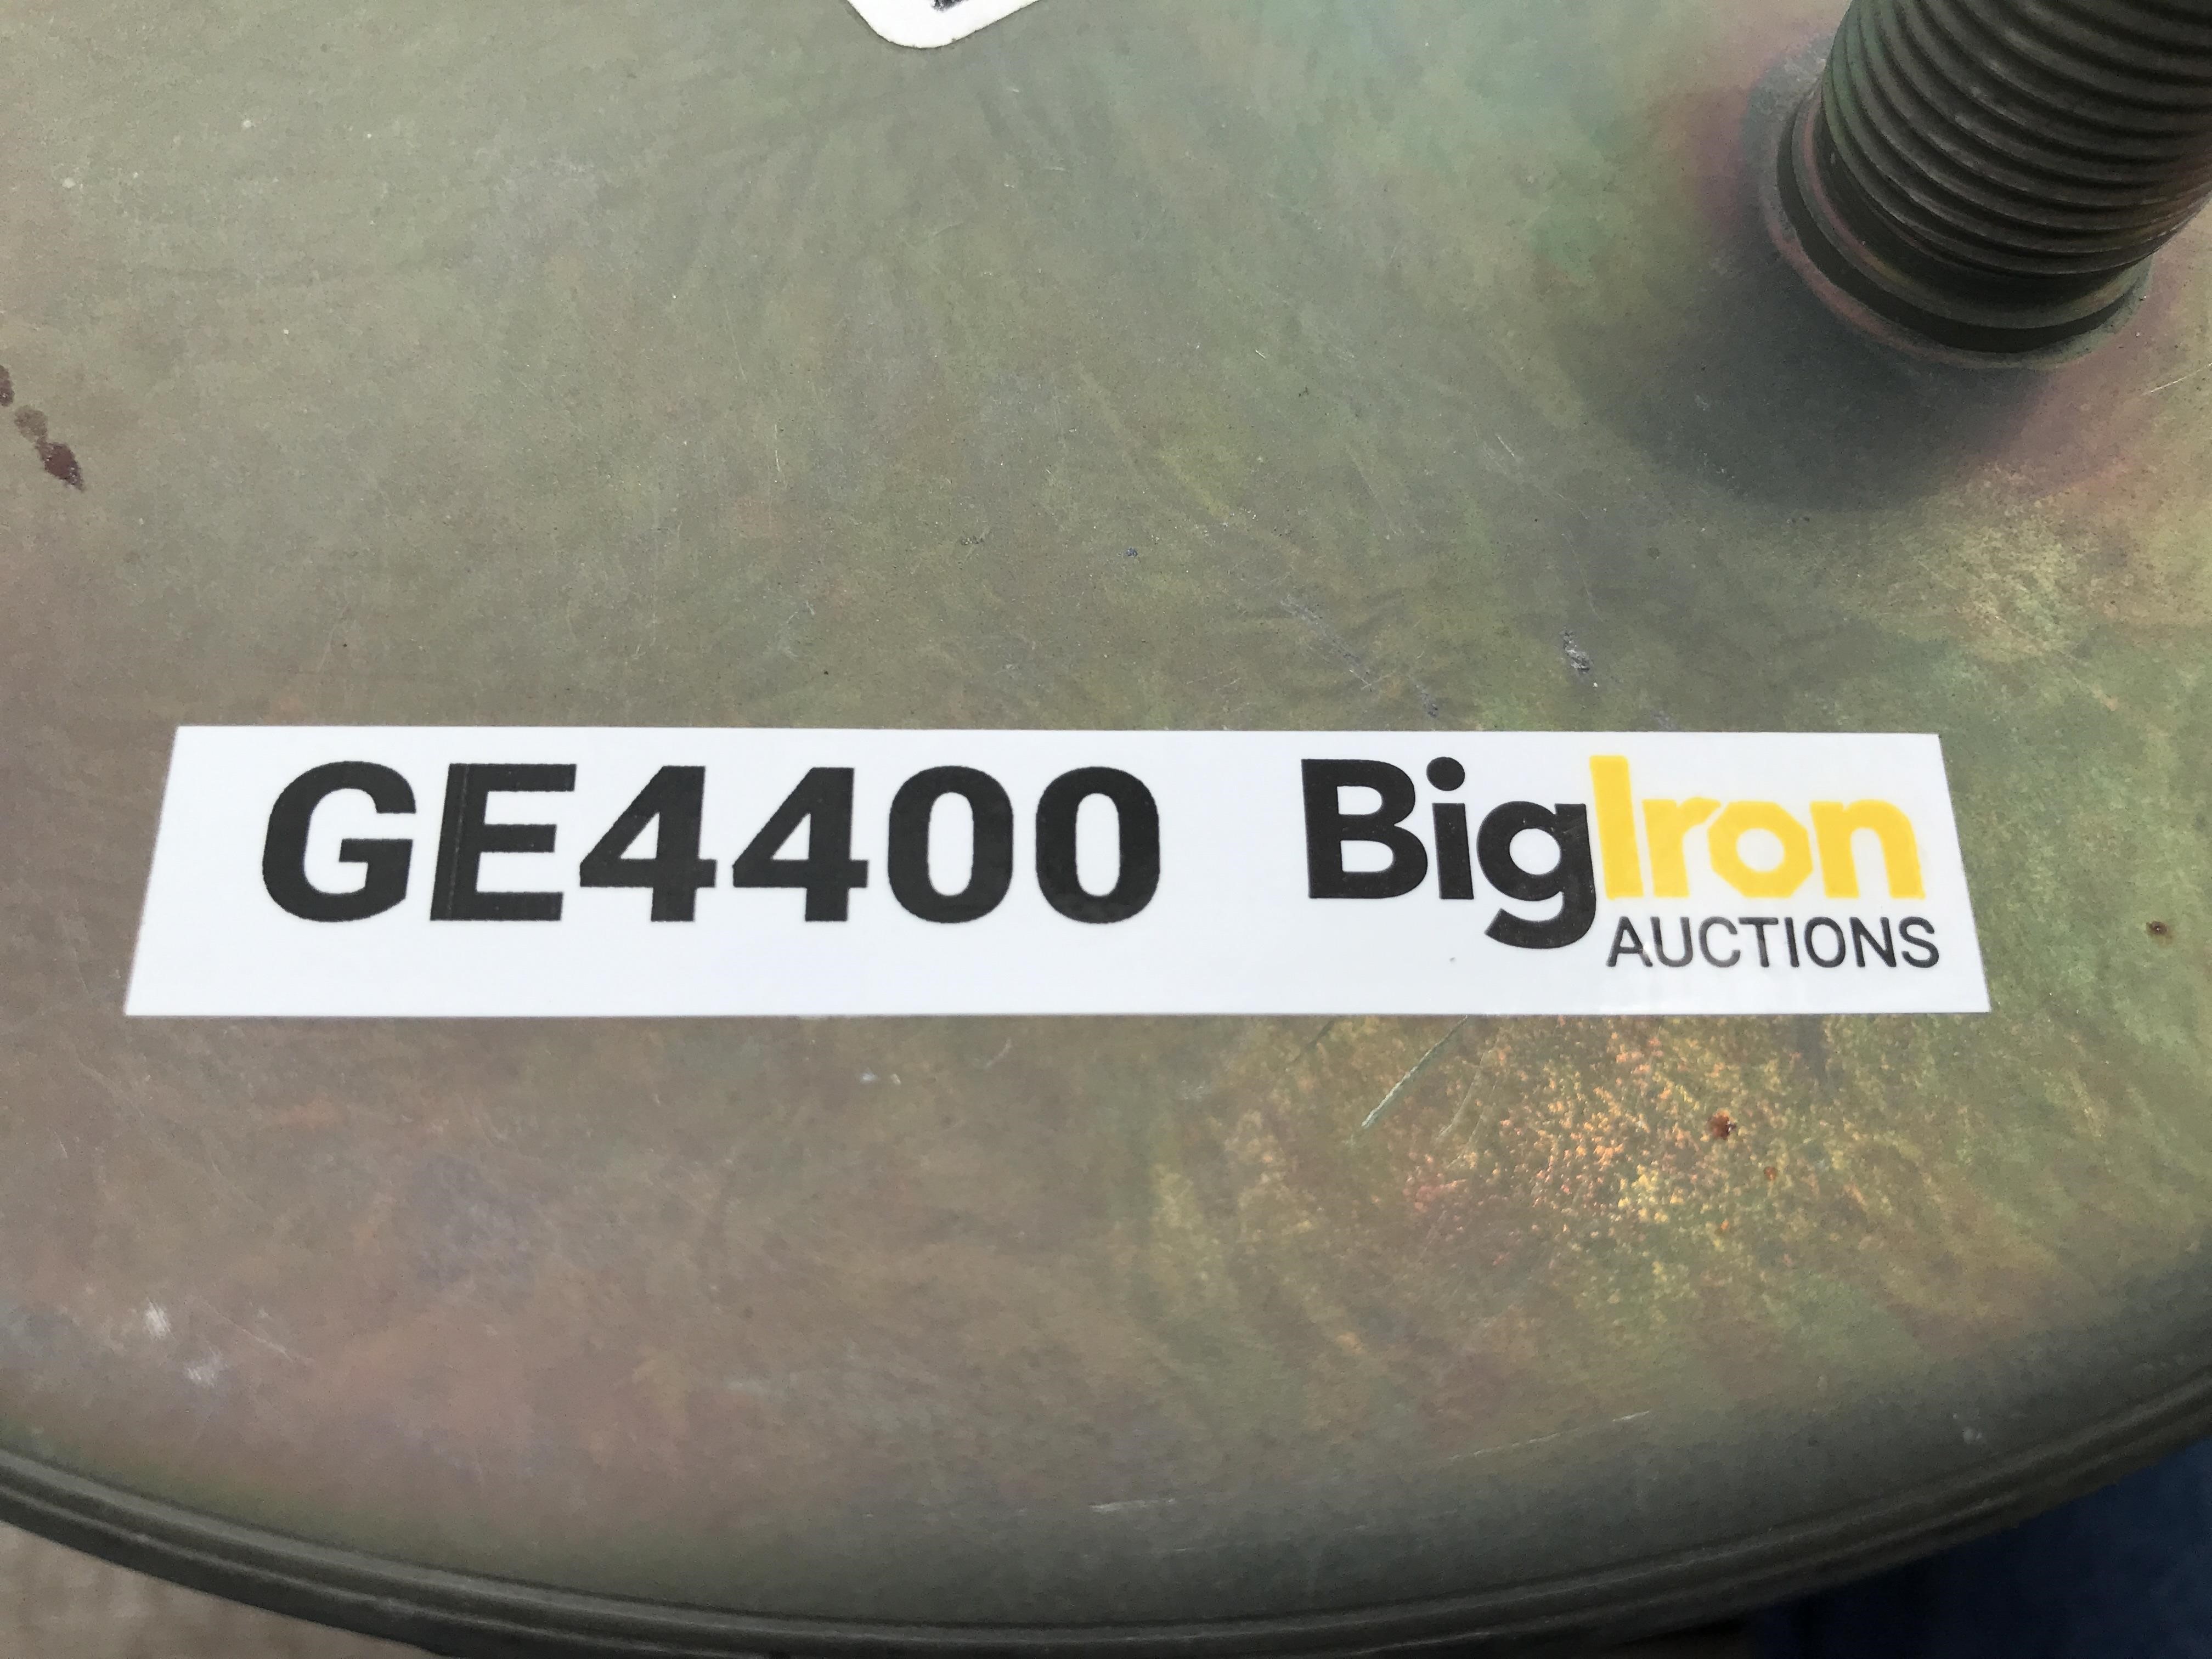 Hendrickson & Leveler C-20127 & RL74030 Air Bags BigIron Auctions